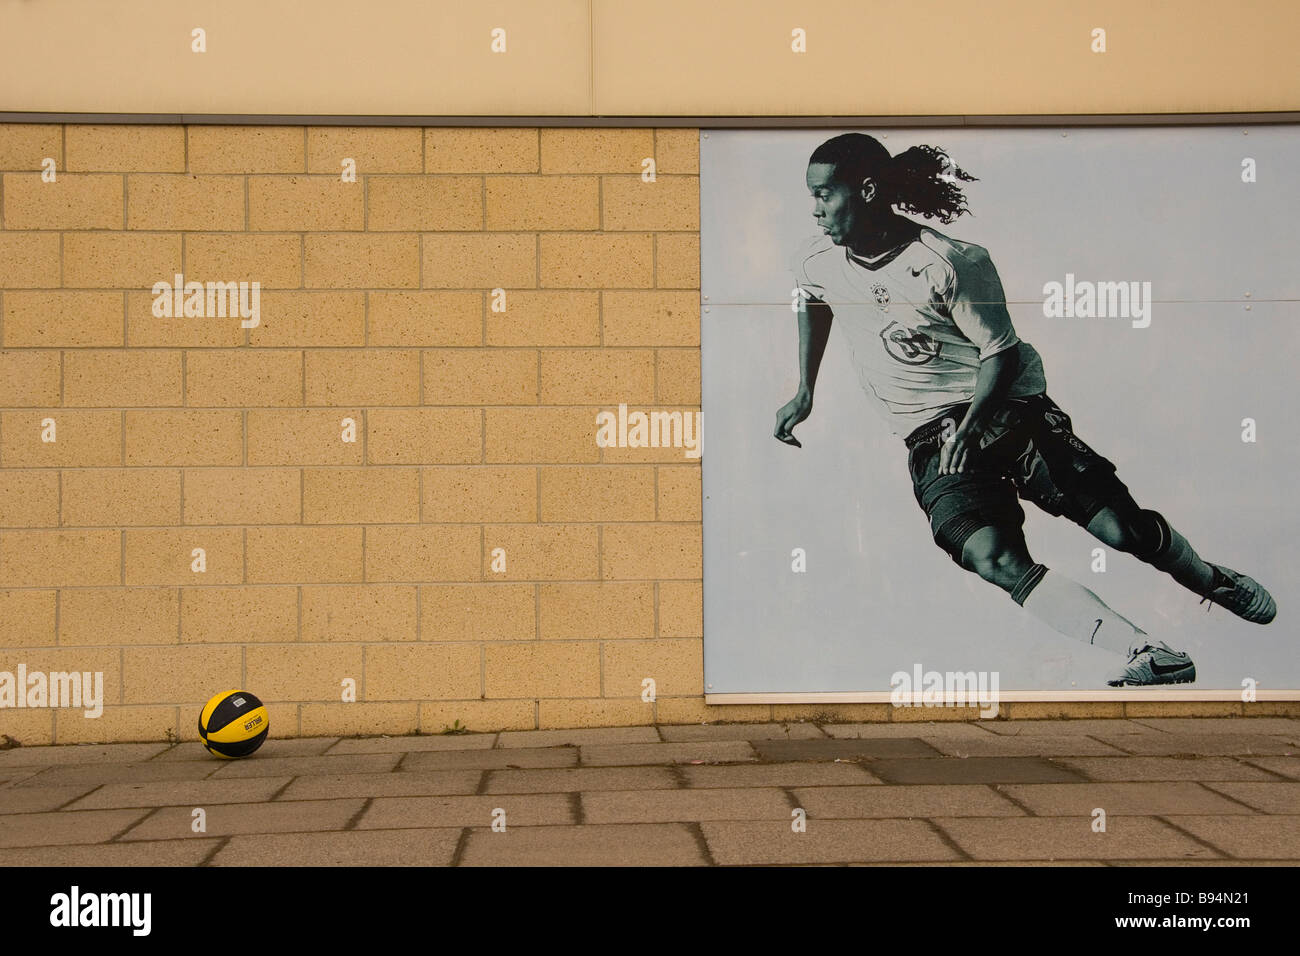 Nike Werbung mit Ronaldinho im Royal Kais shopping Outlet in North Shields.  UK Stockfotografie - Alamy